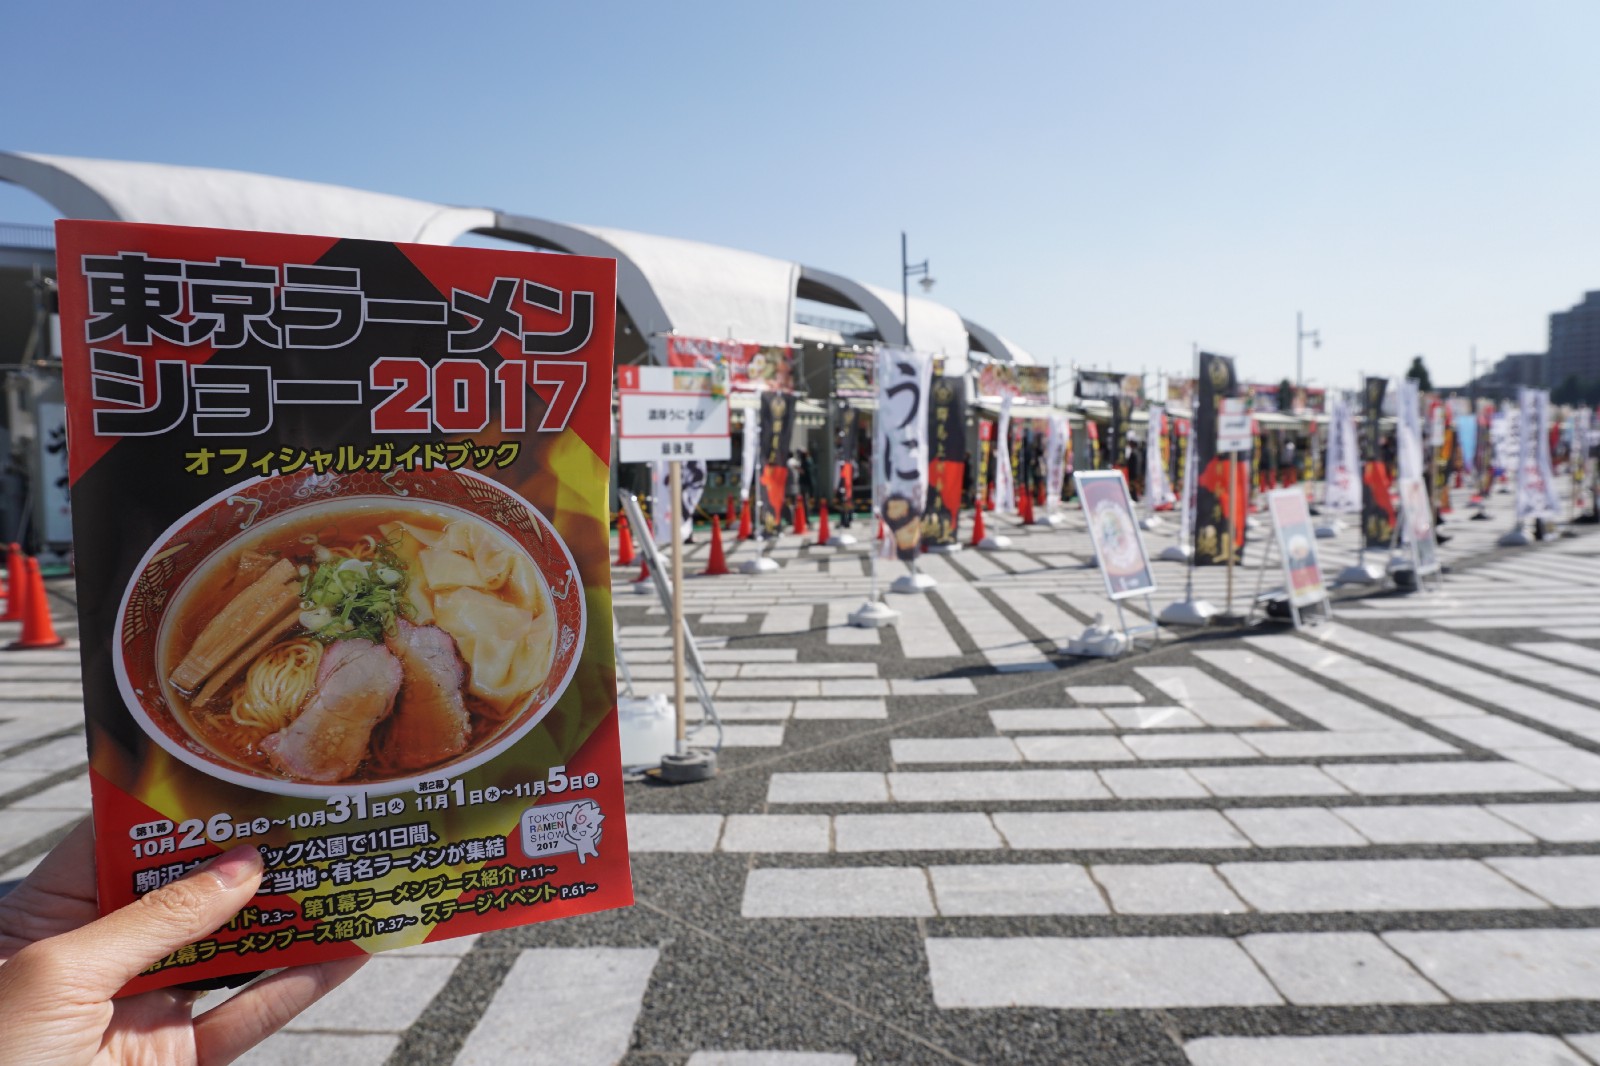 Tokyo Ramen Show is held annually at Komazawa Park, Tokyo